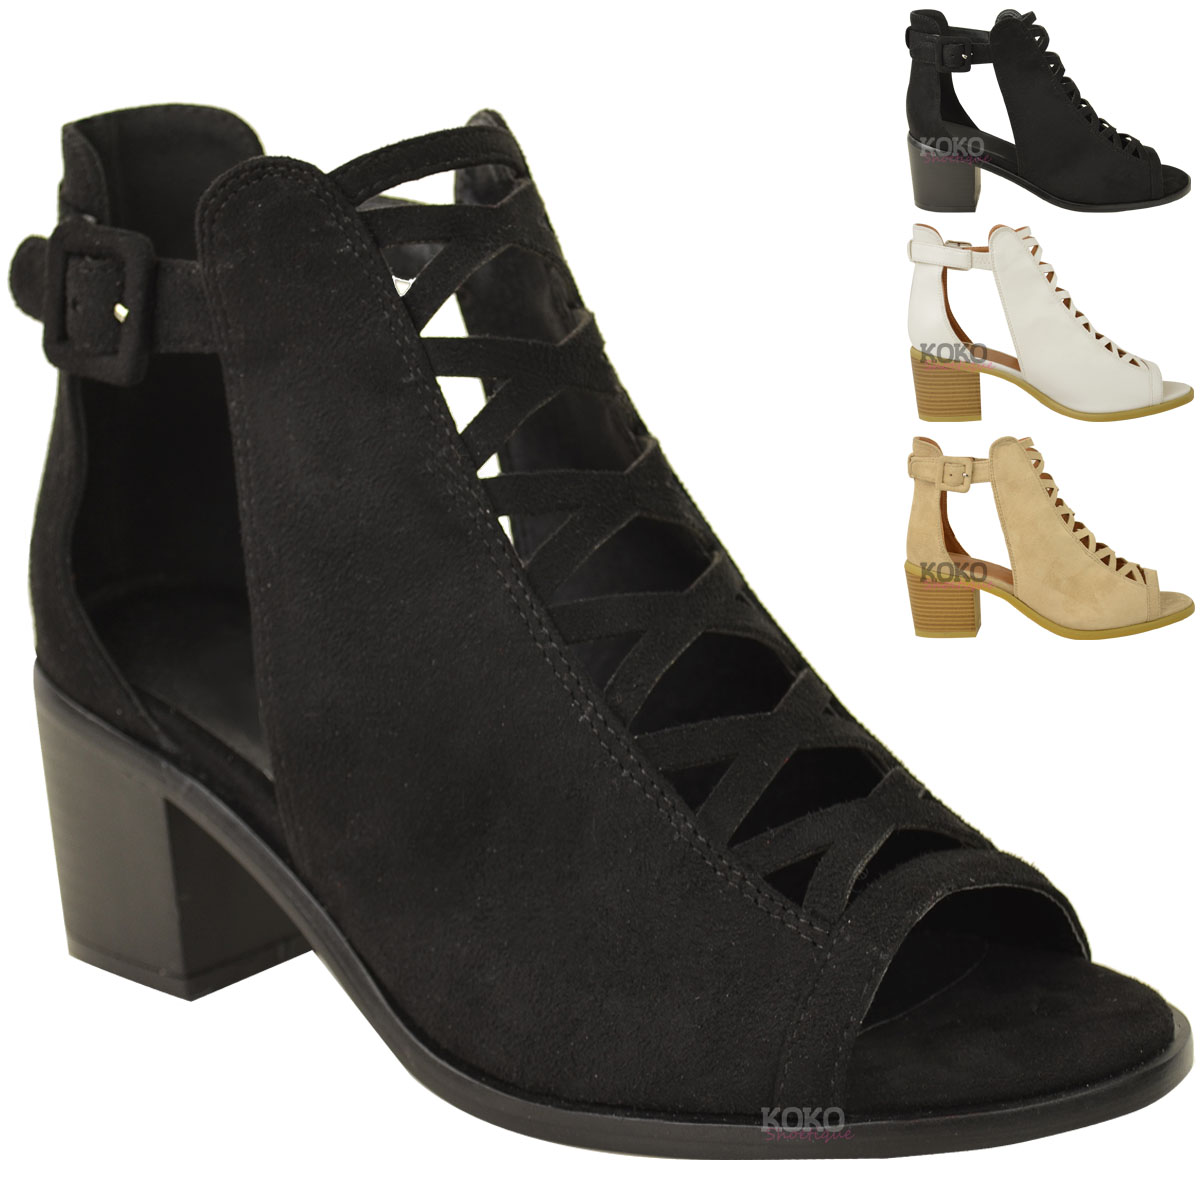 Elisabeth Womens Faux Leather Strappy Low Block Heel Buckle Fastening Fashion Sandals Black 7 B US M 